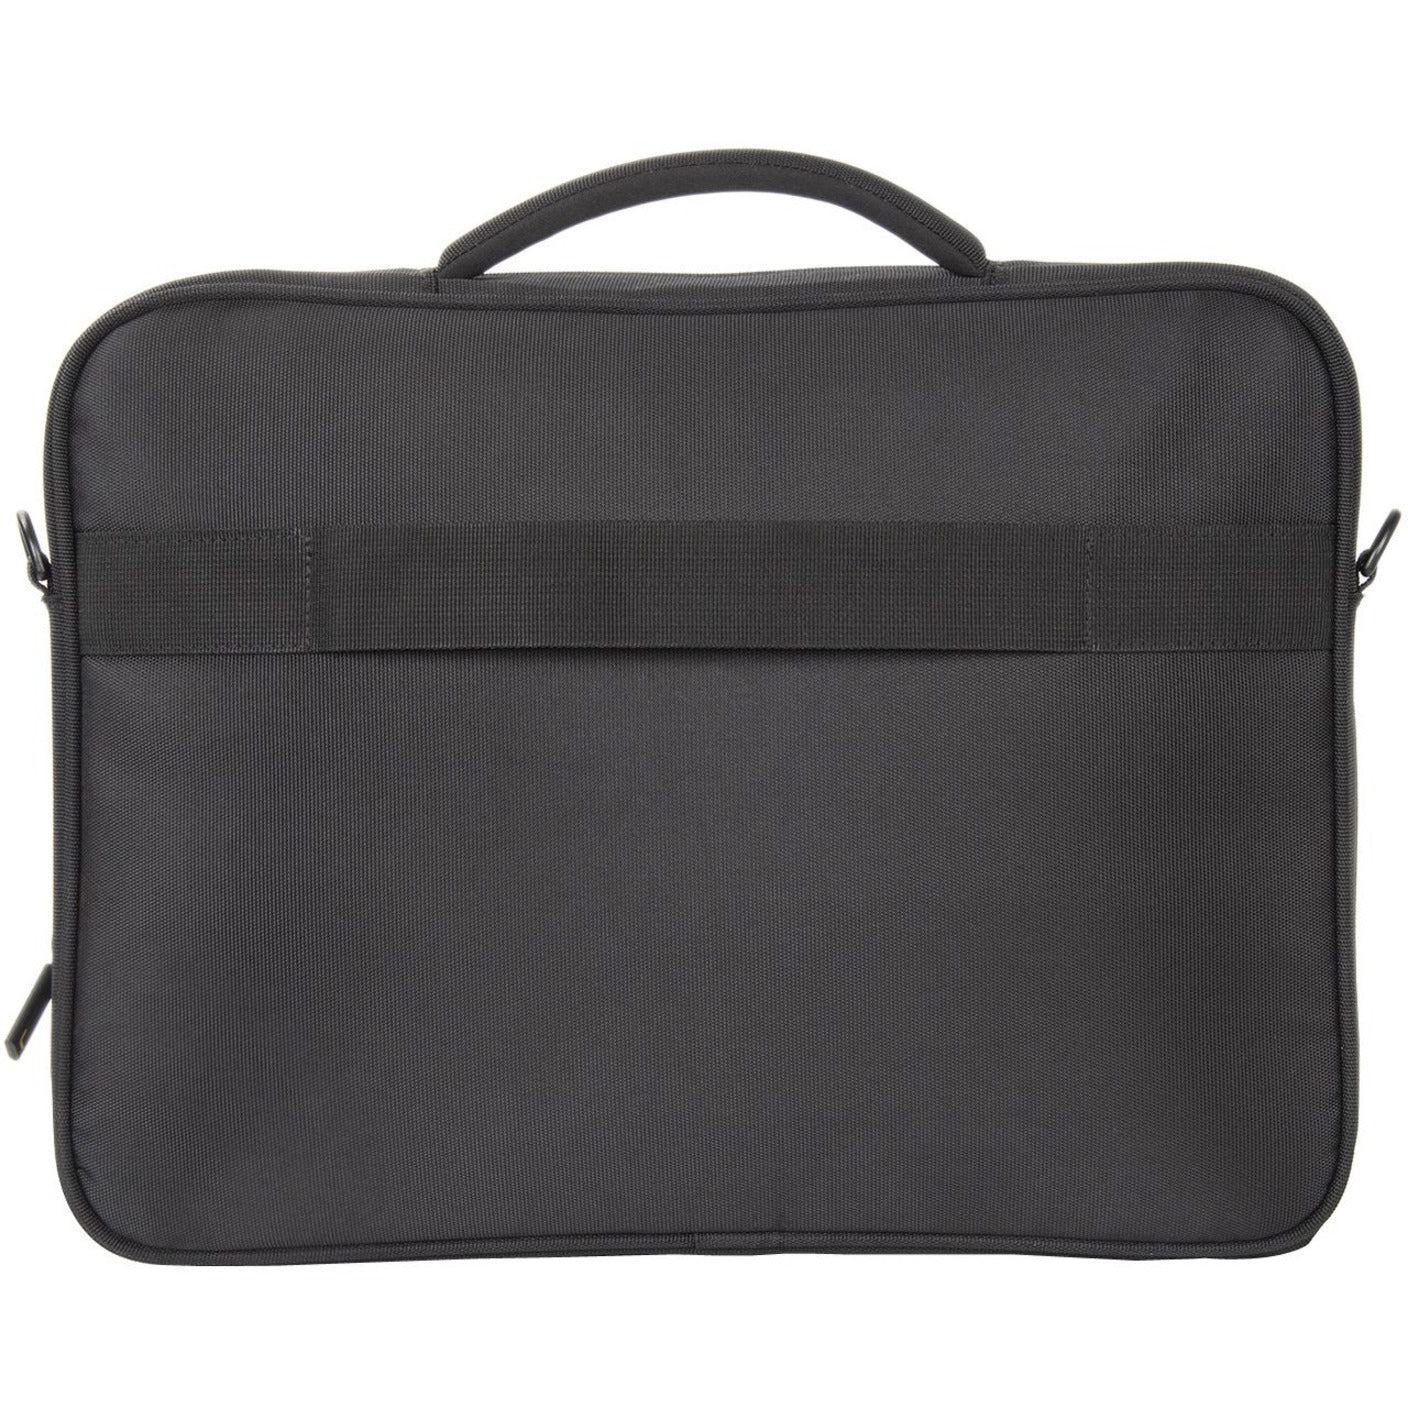 Rocstor Y1CC003-B1 Premium Universal Laptop Carrying Case Frontloading